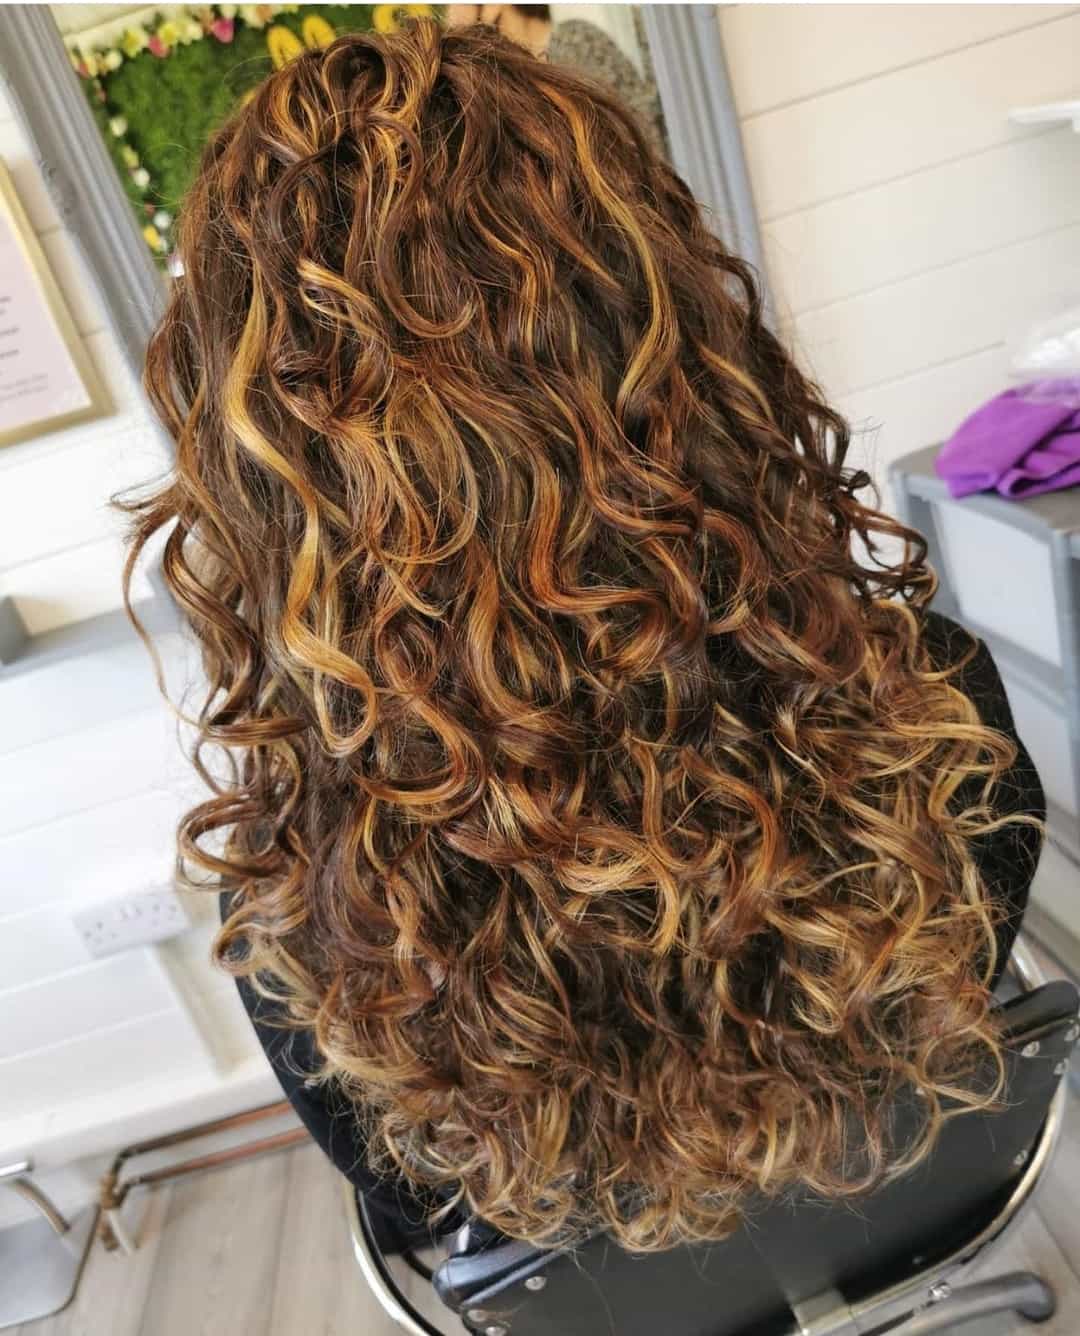 dyed curly hair ideas